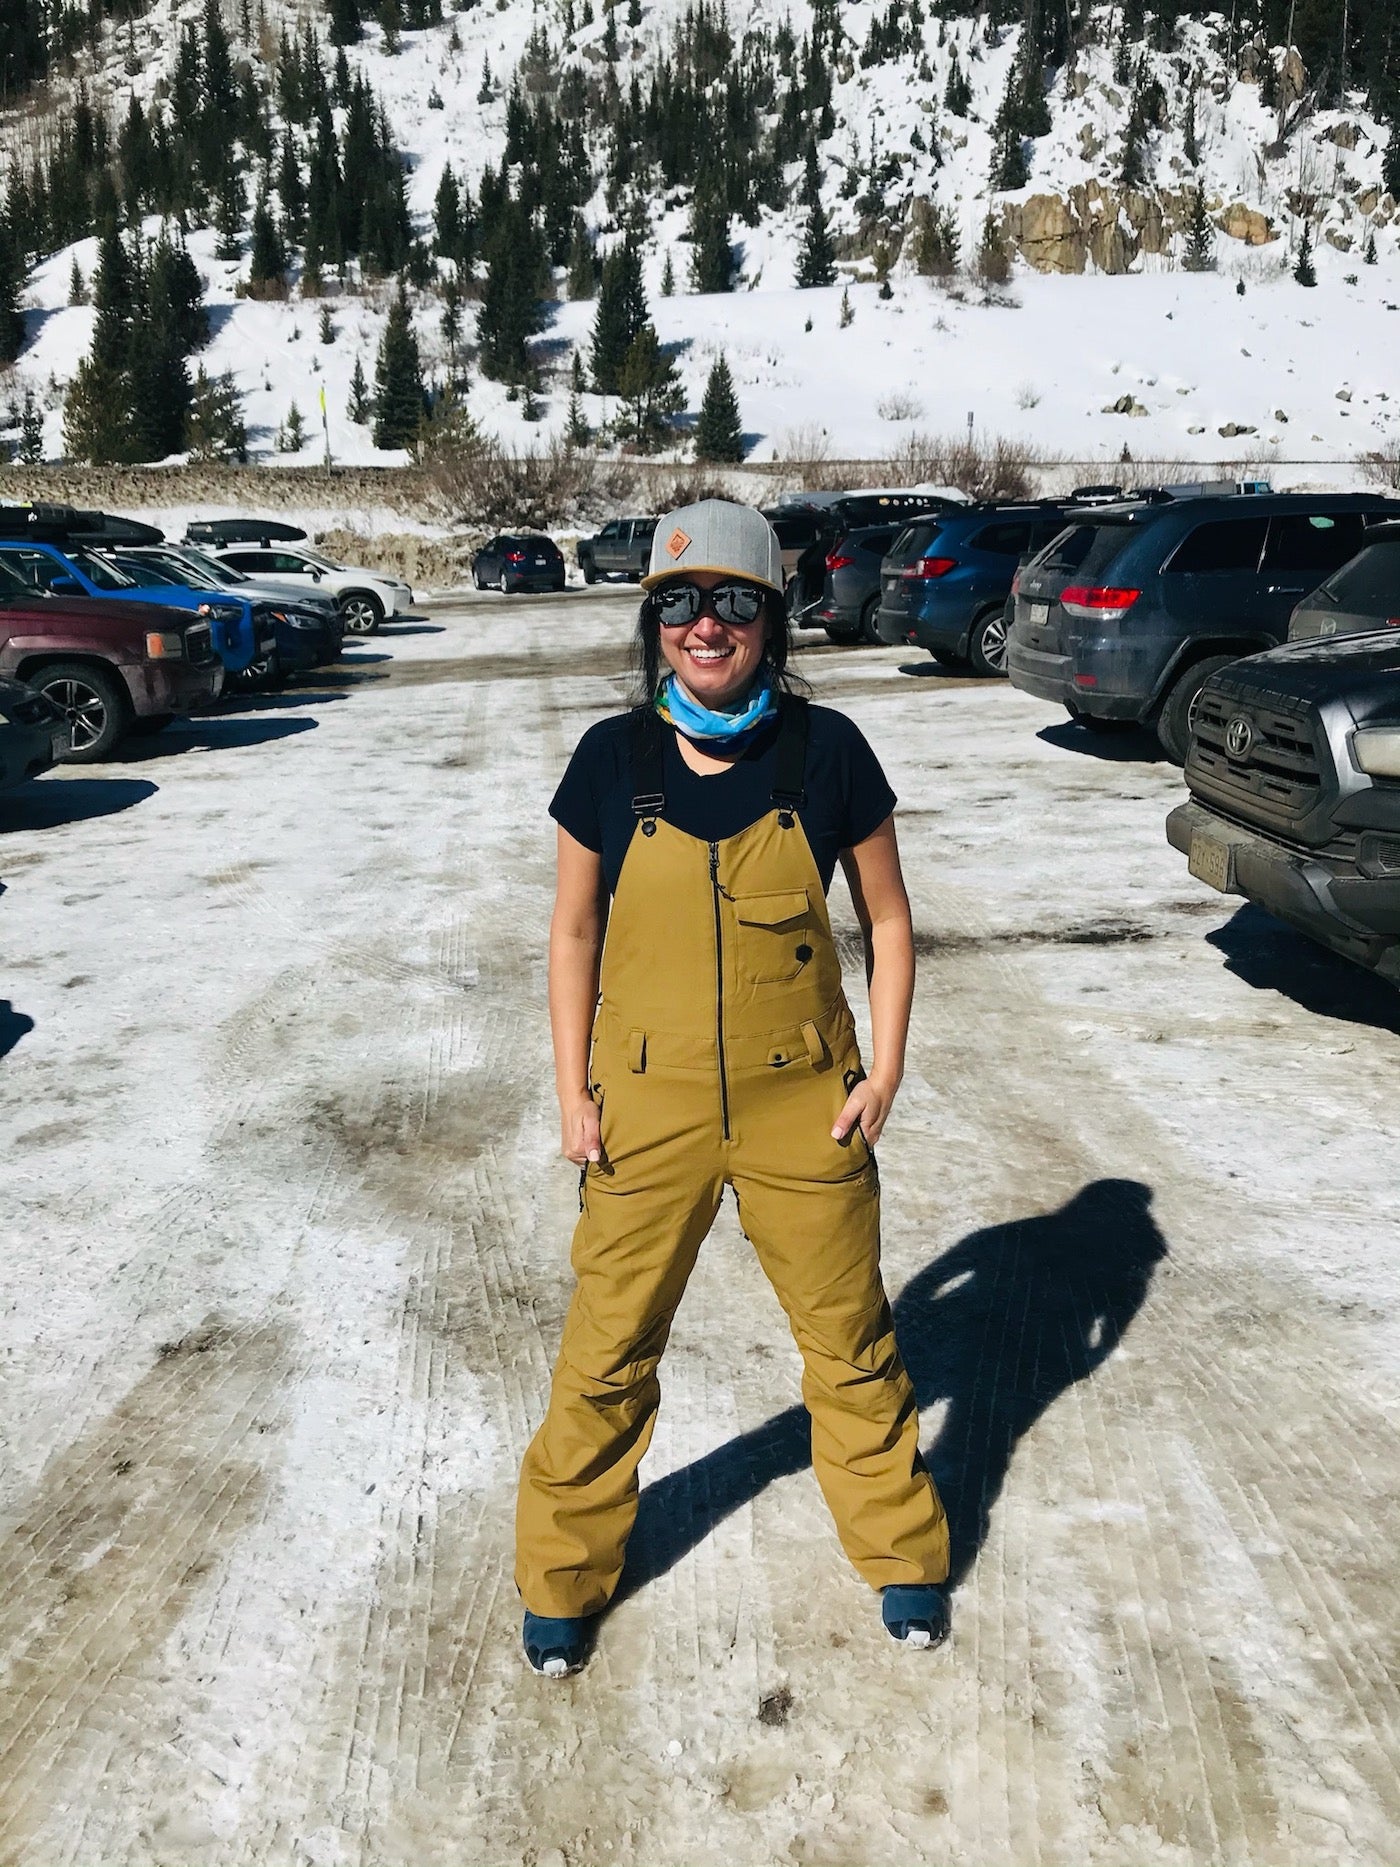 Woman in ski suit